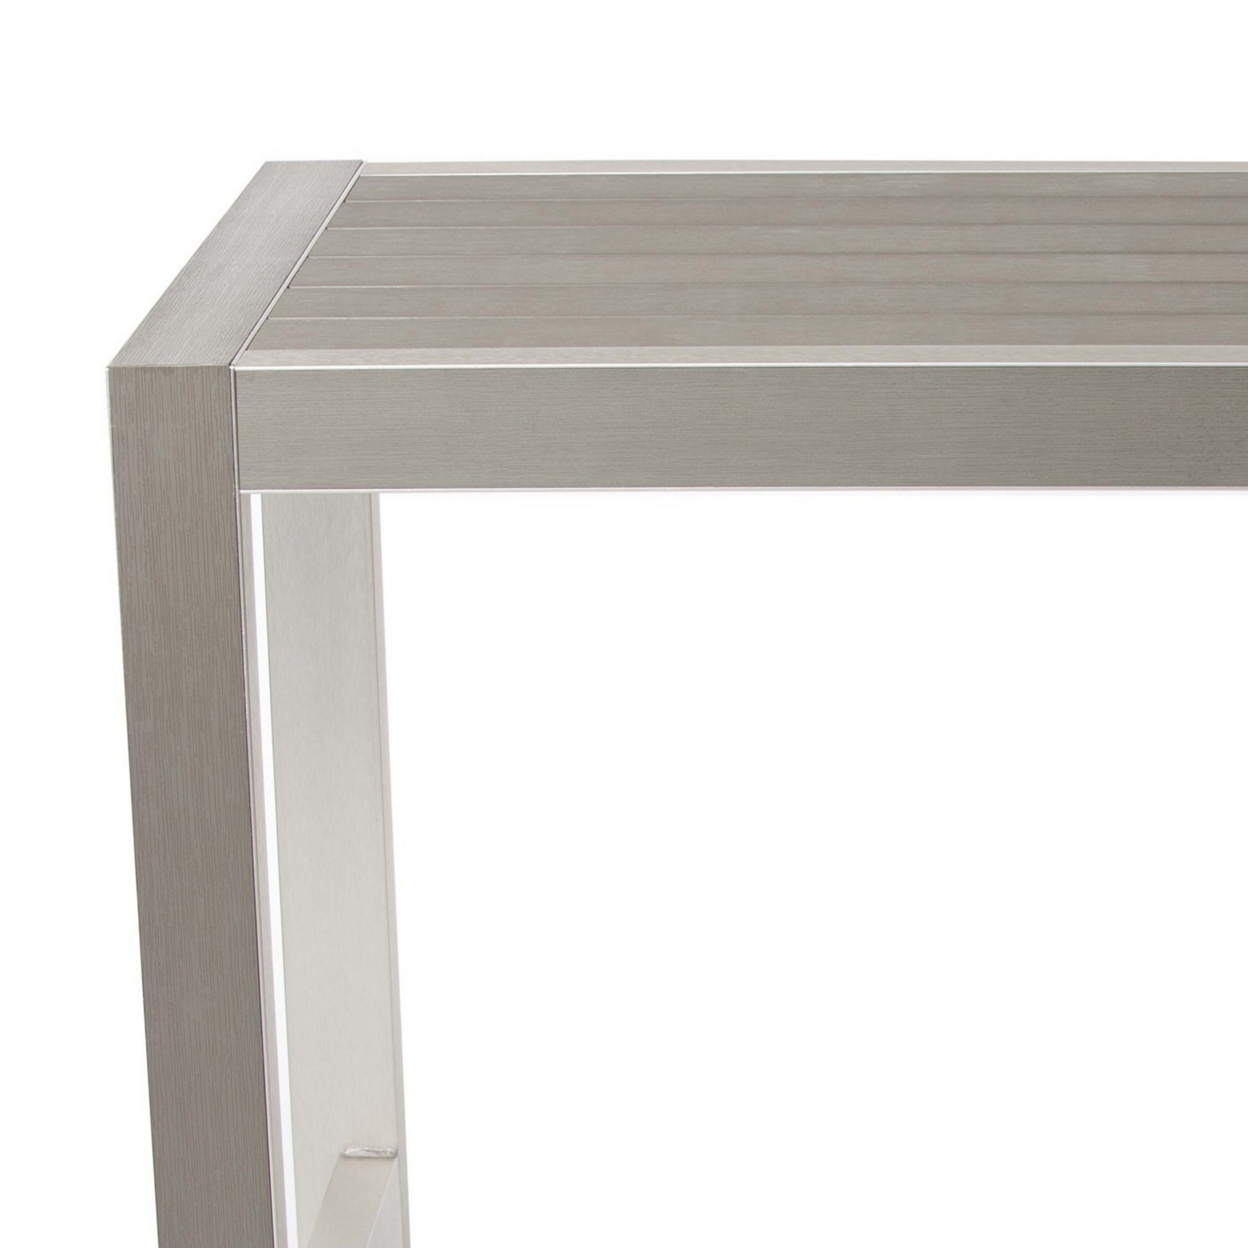 Kylo 59 Inch Outdoor Bar Table, Gray Aluminum Frame, Plank Surface, Large- Saltoro Sherpi